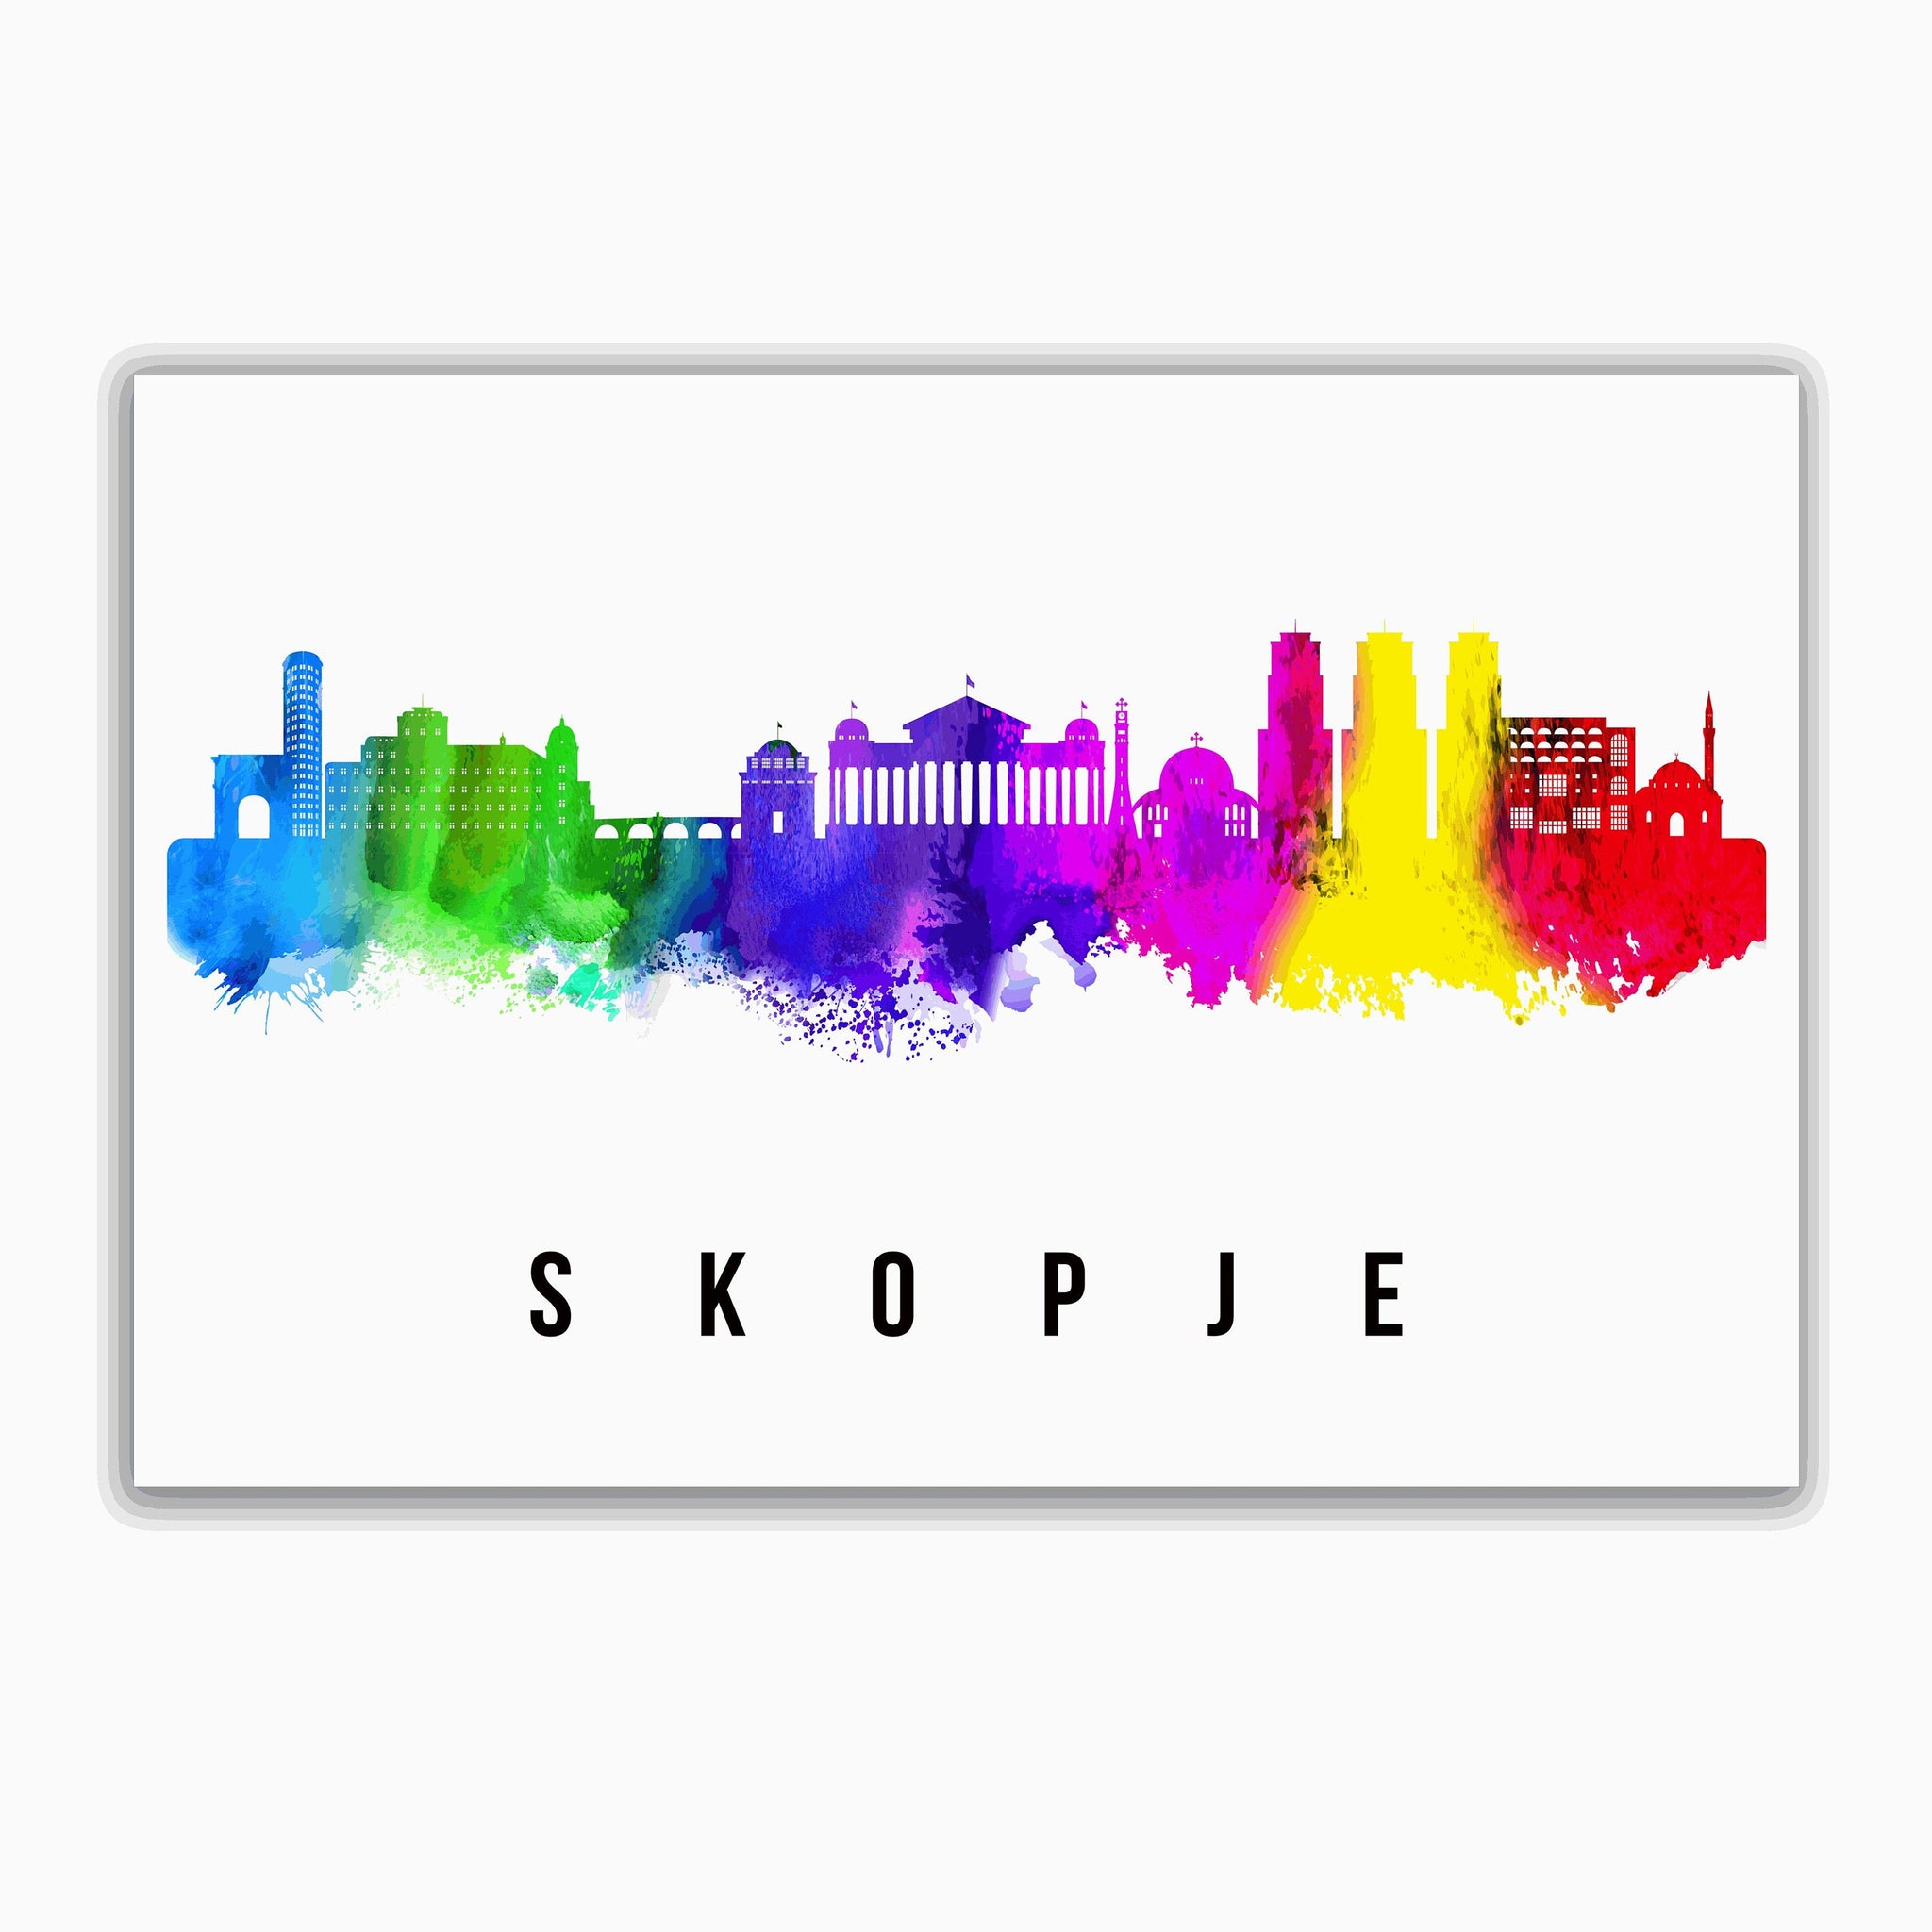 SKOPJE - MACEDONIA Poster, Skyline Poster Cityscape and Landmark Skopje City Illustration Home Wall Art, Office Decor